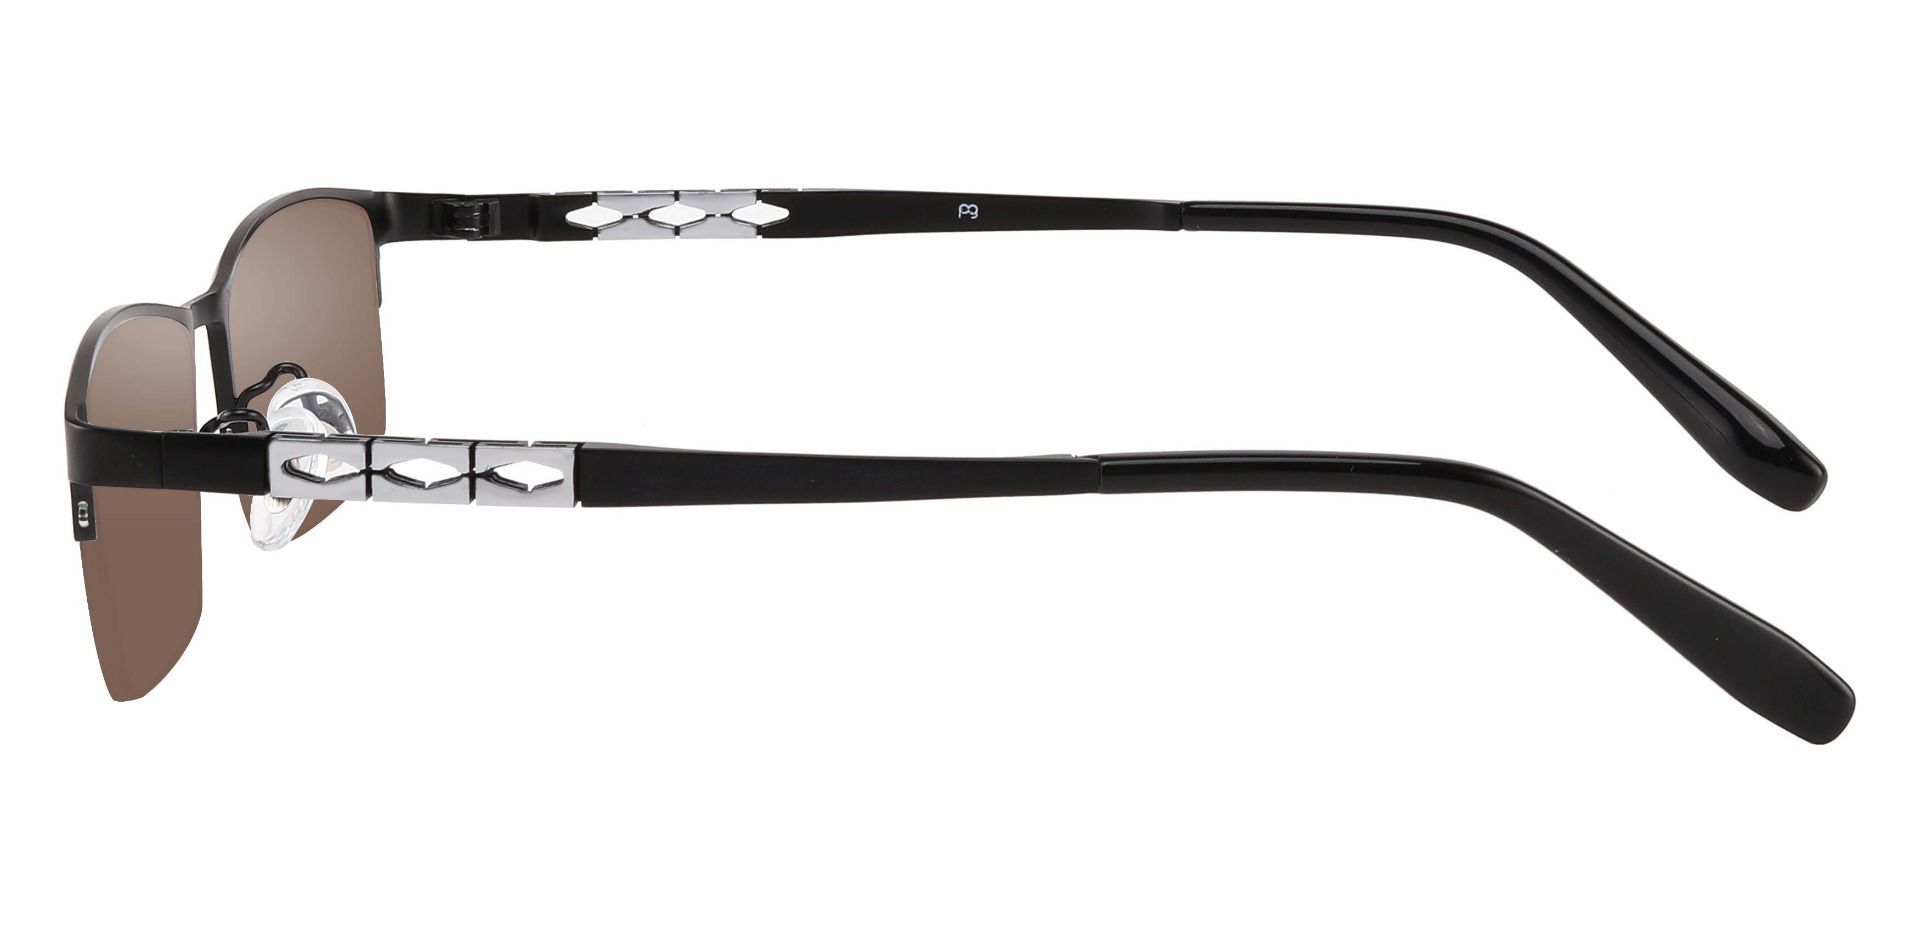 Burlington Rectangle Lined Bifocal Sunglasses - Black Frame With Brown Lenses